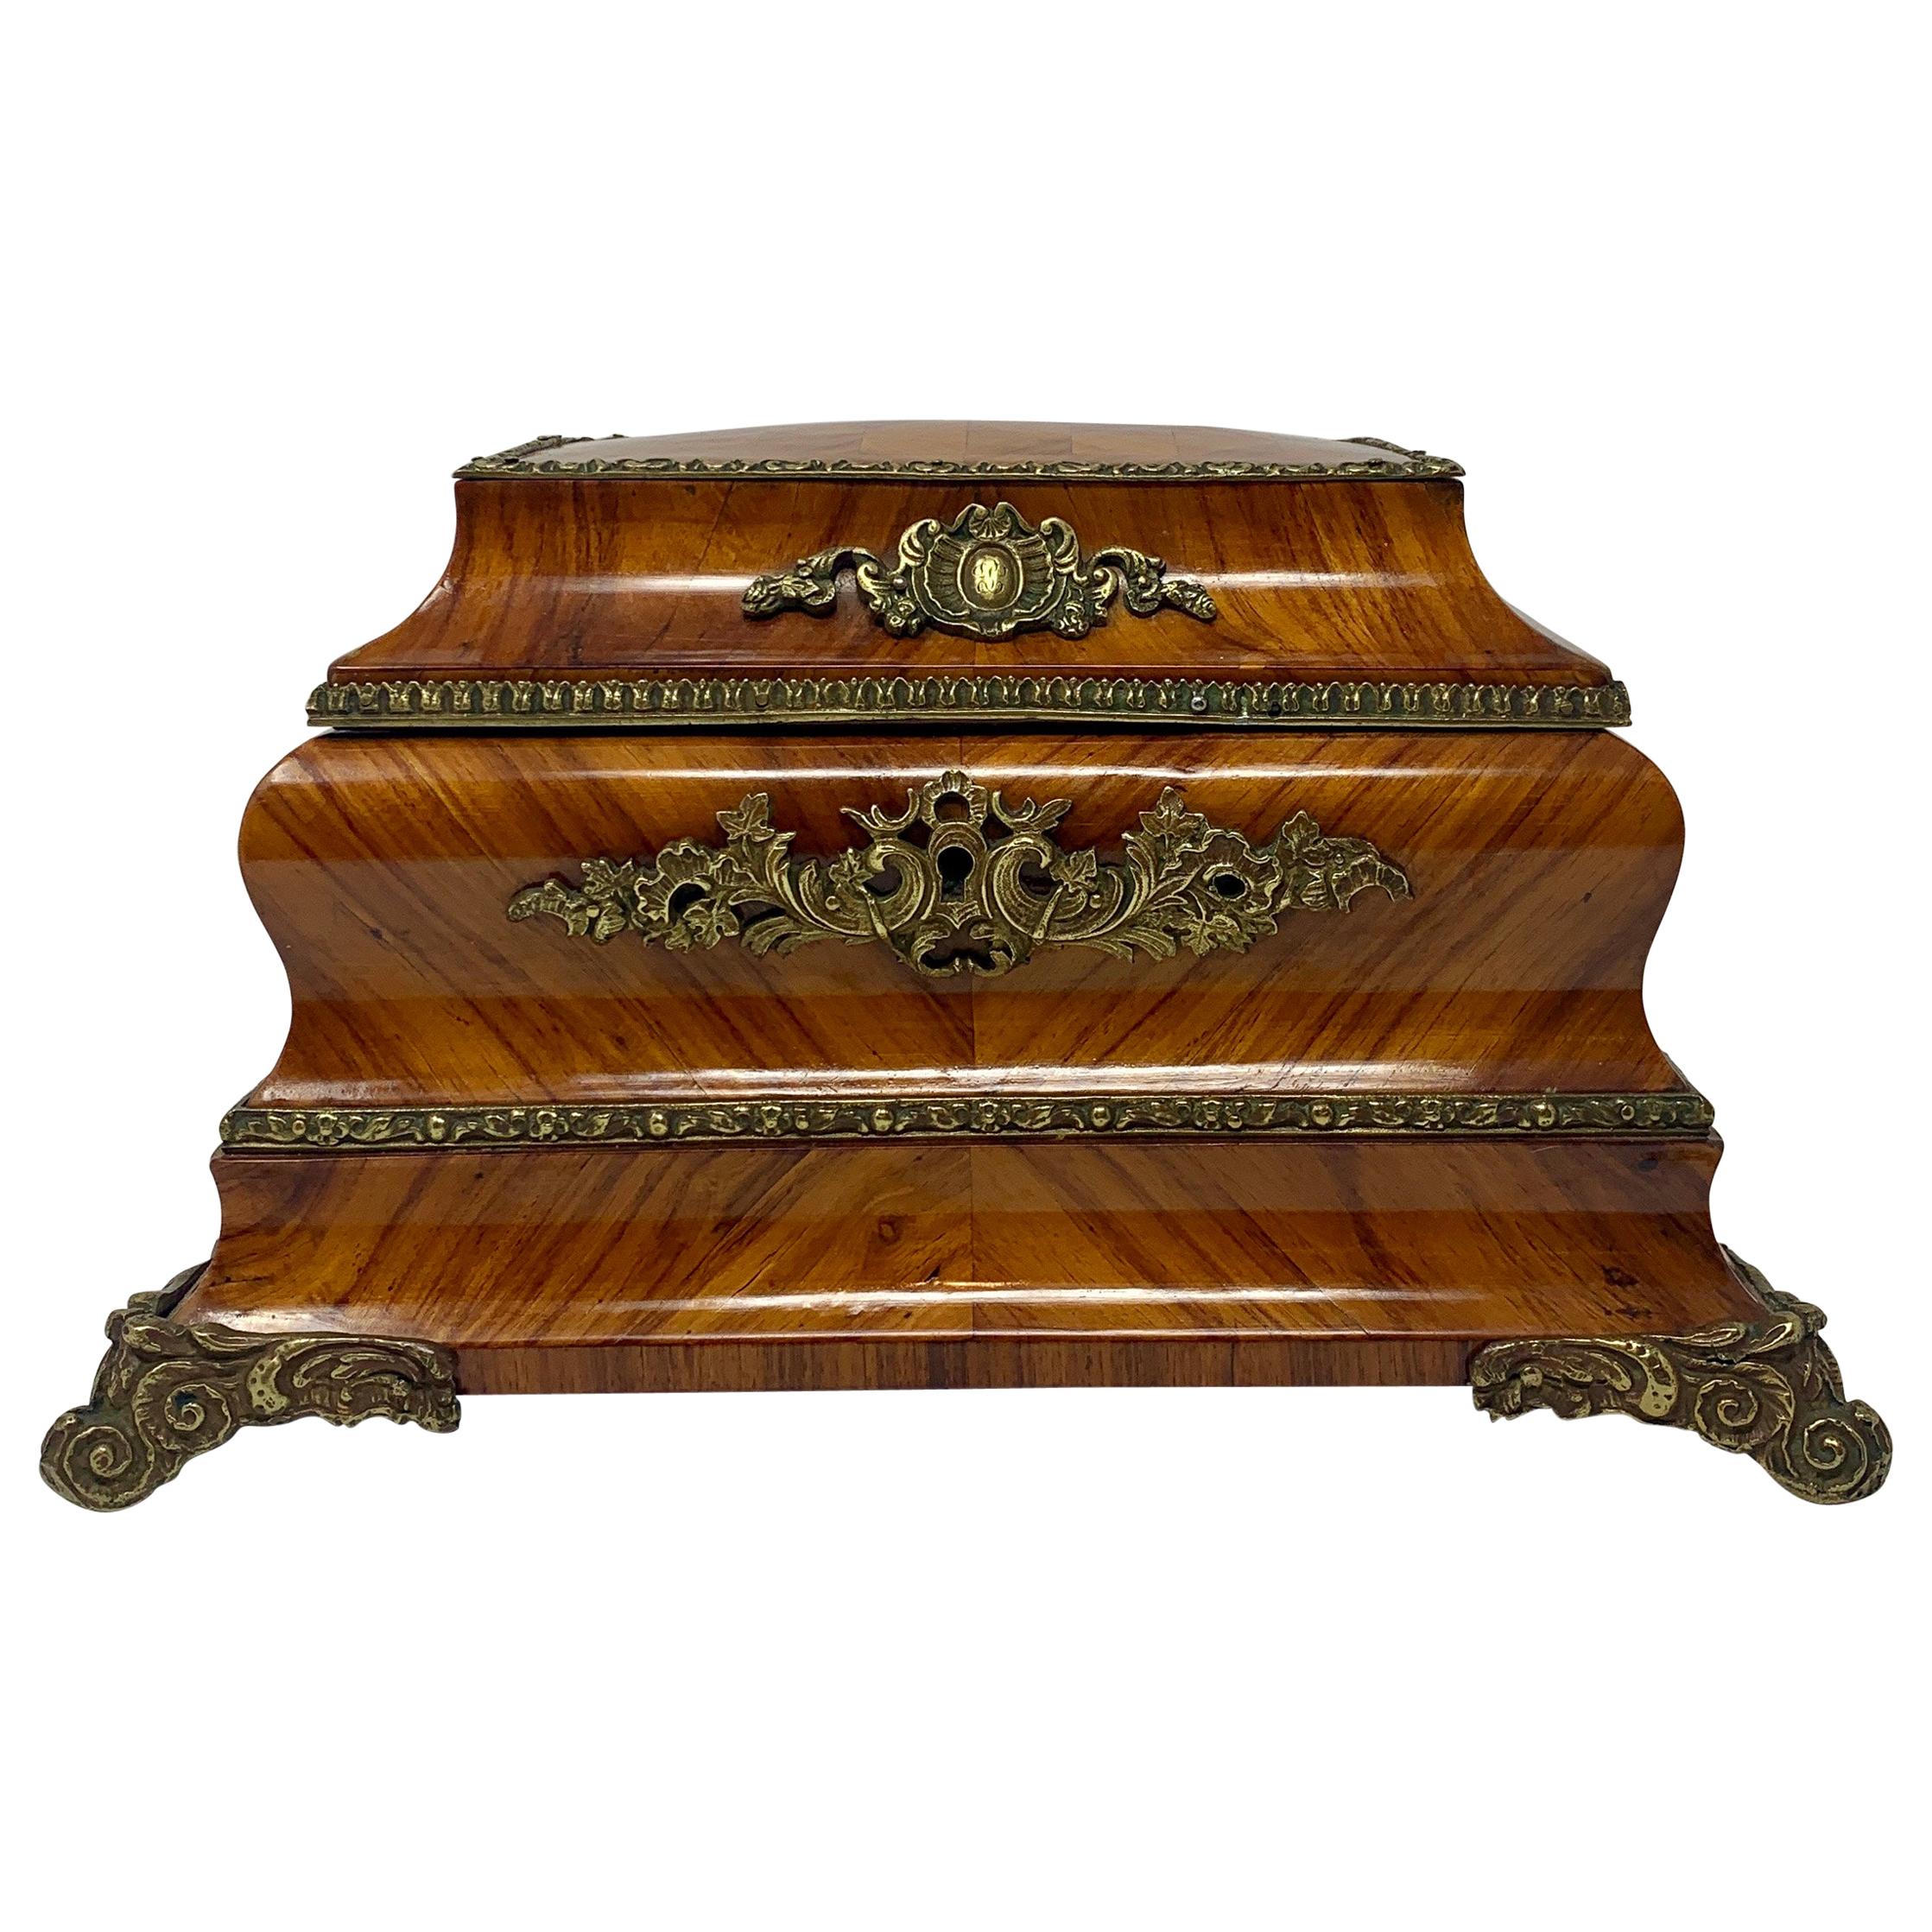 Antique French Shaped Kingwood Jewel Box